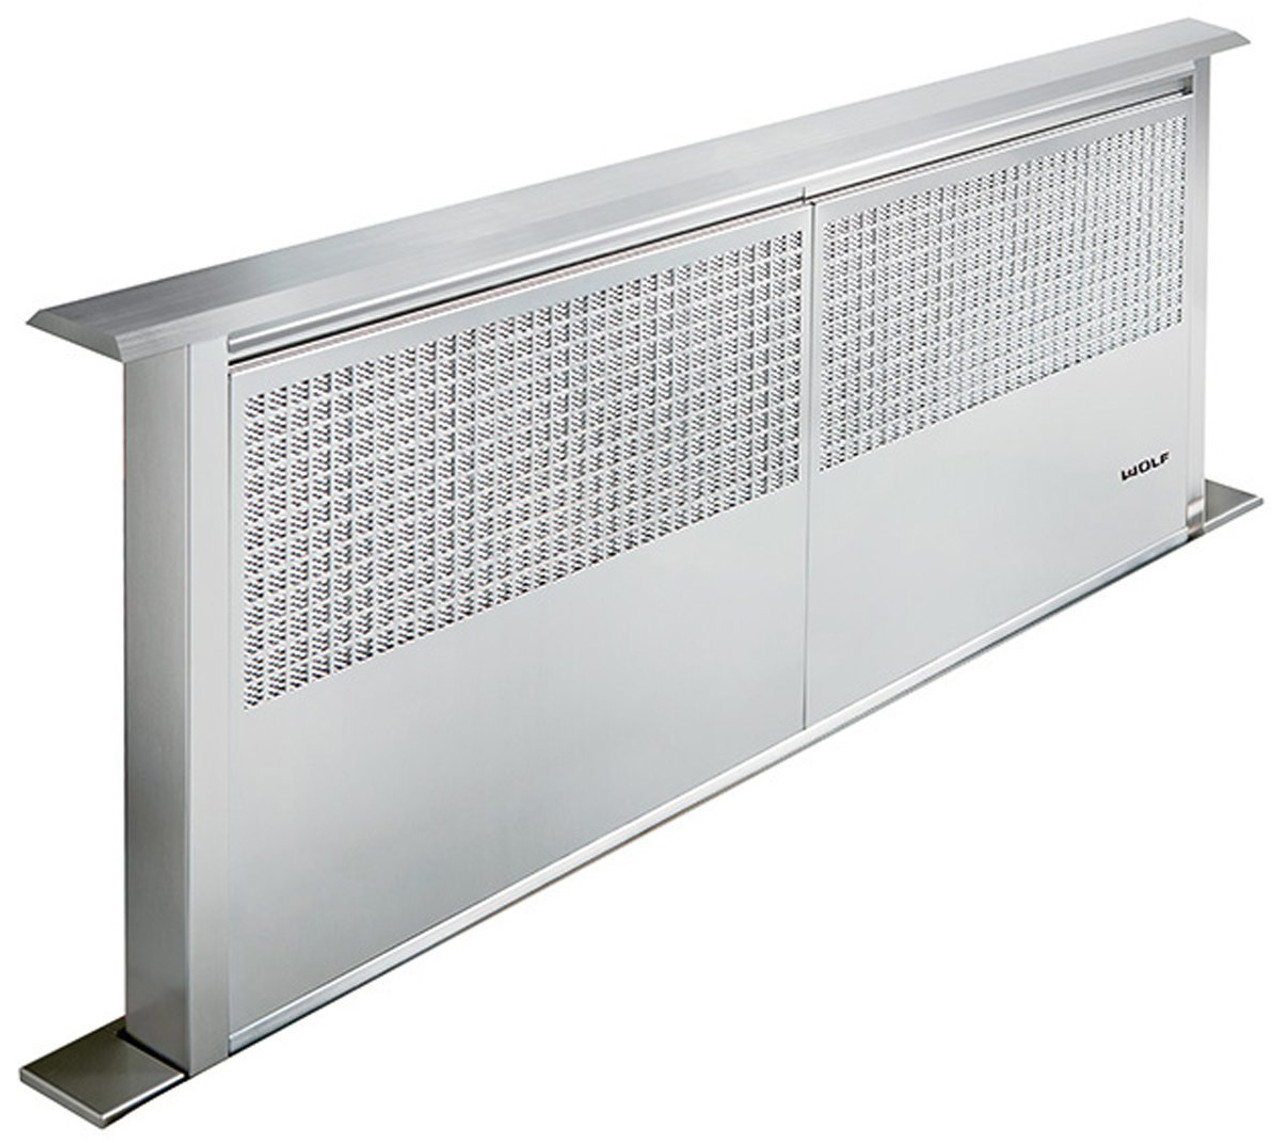 ICBDD36 - 76cm Downdraft Ventilation (Internal Blower Required) - Stainless Steel